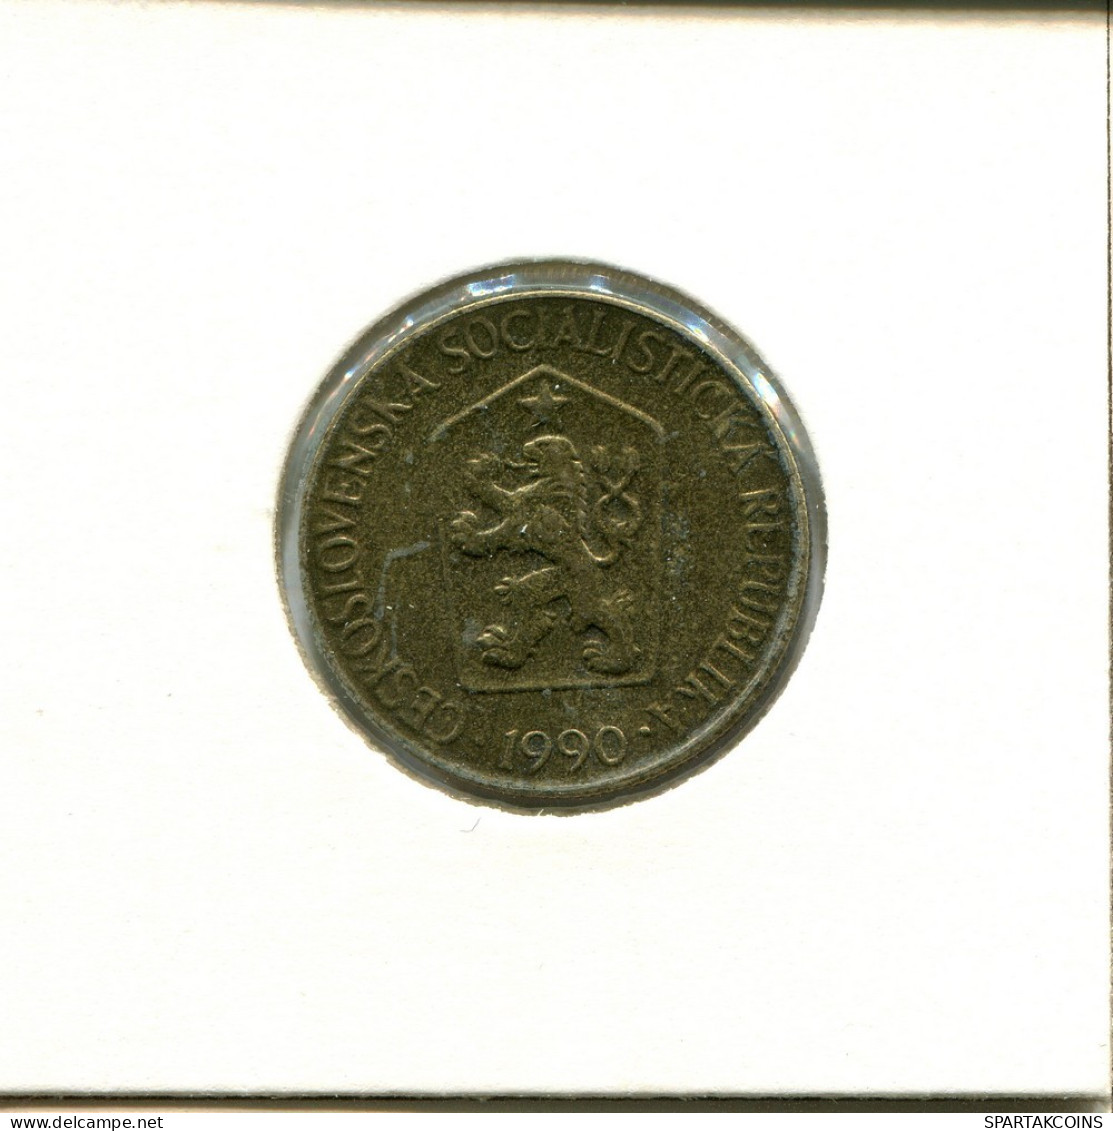 1 KORUNA 1990 TSCHECHOSLOWAKEI CZECHOSLOWAKEI SLOVAKIA Münze #AZ943.D.A - Tschechoslowakei